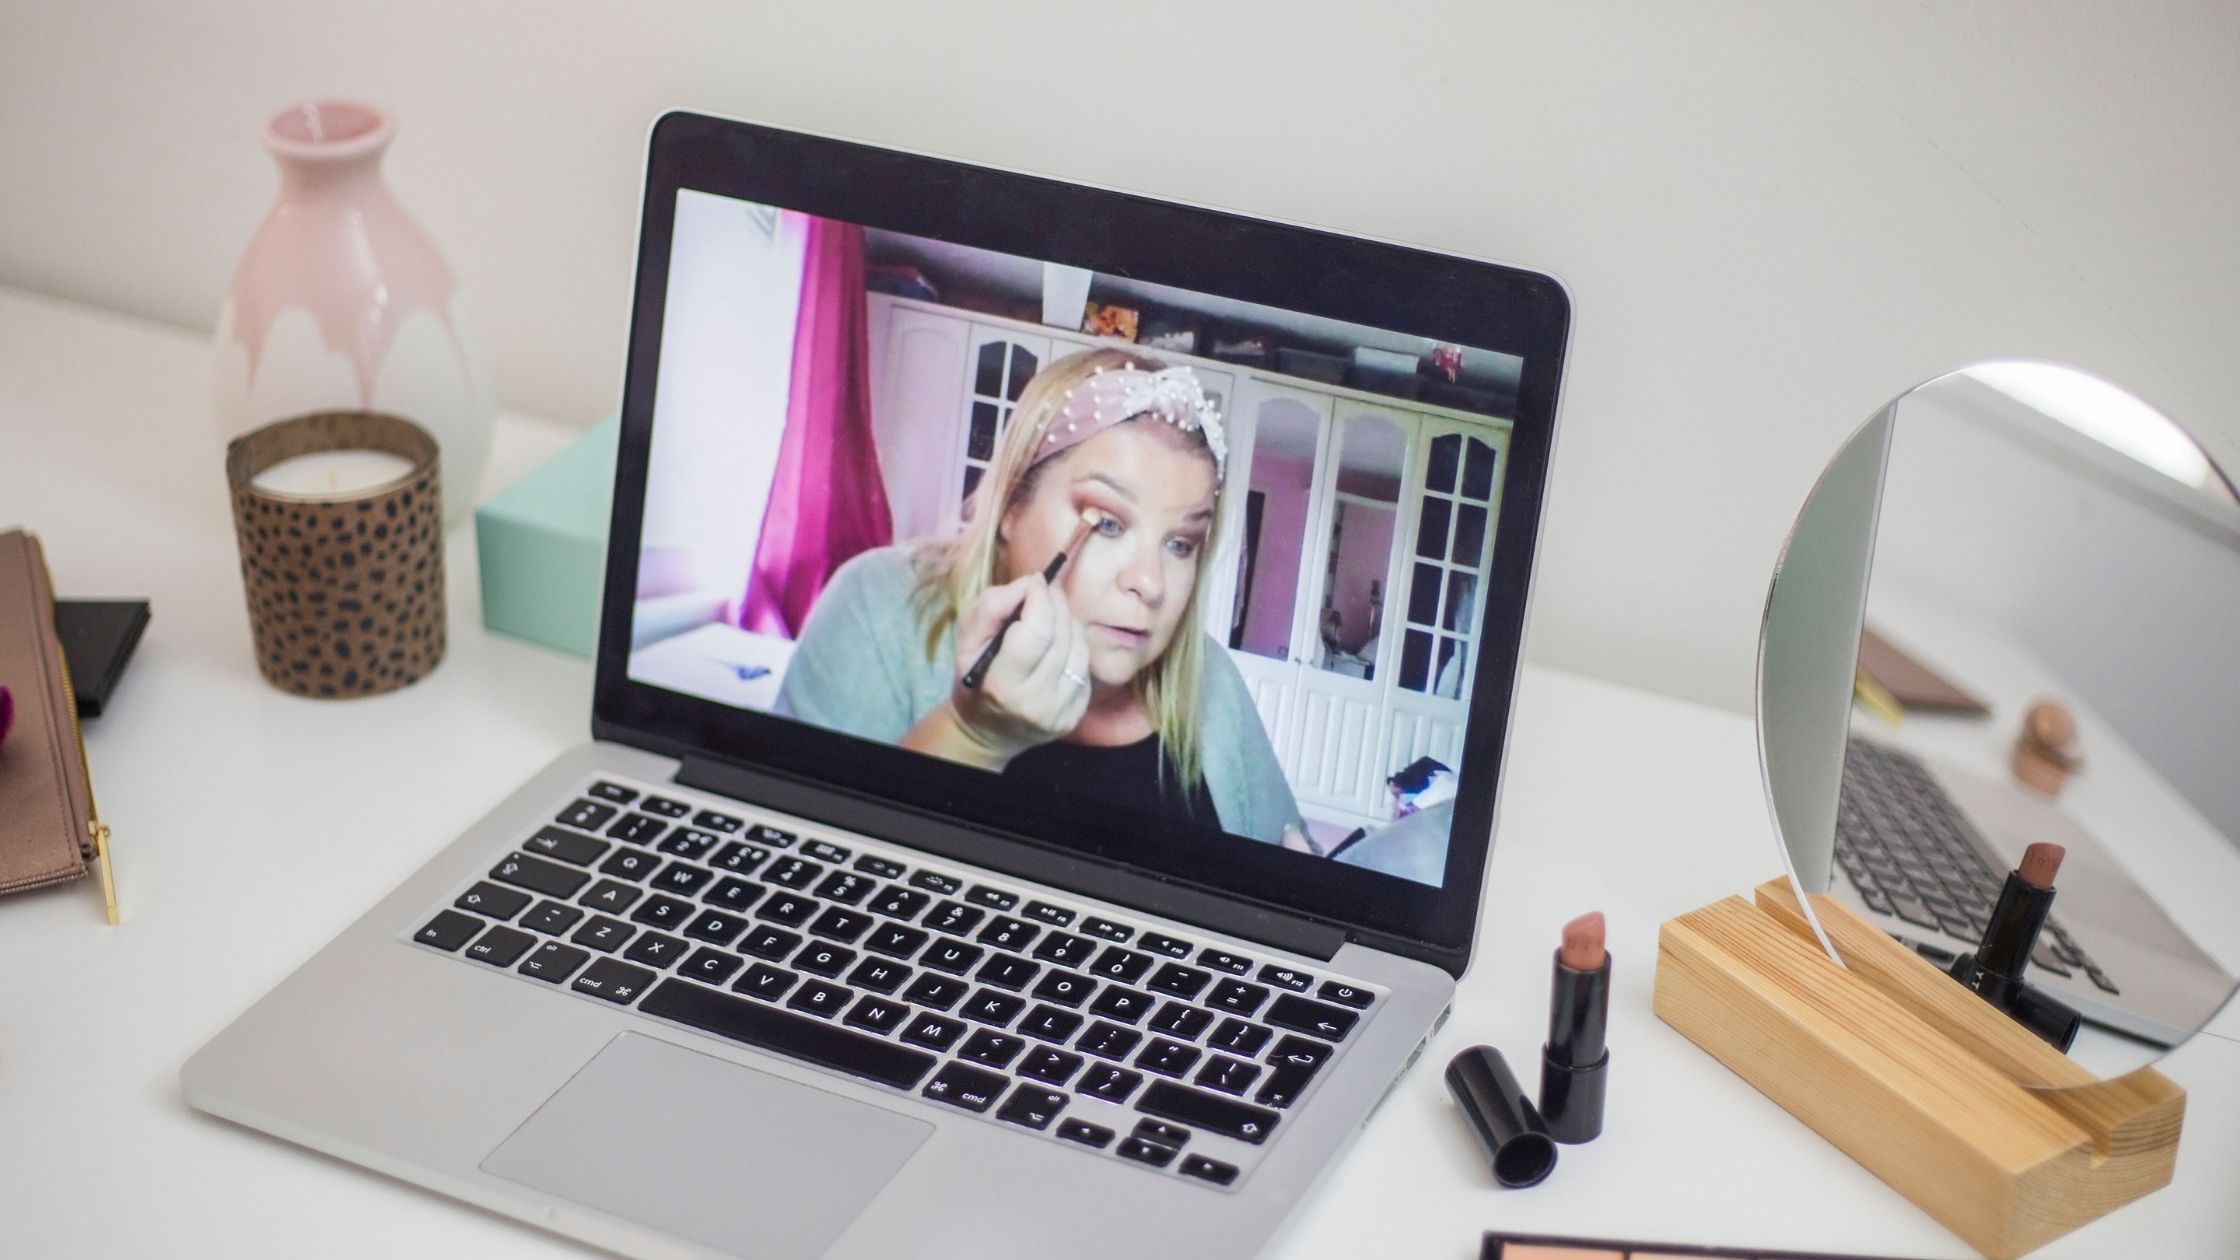 makeup artist applying makeup on herself on a laptop screen during an online makeup lesson